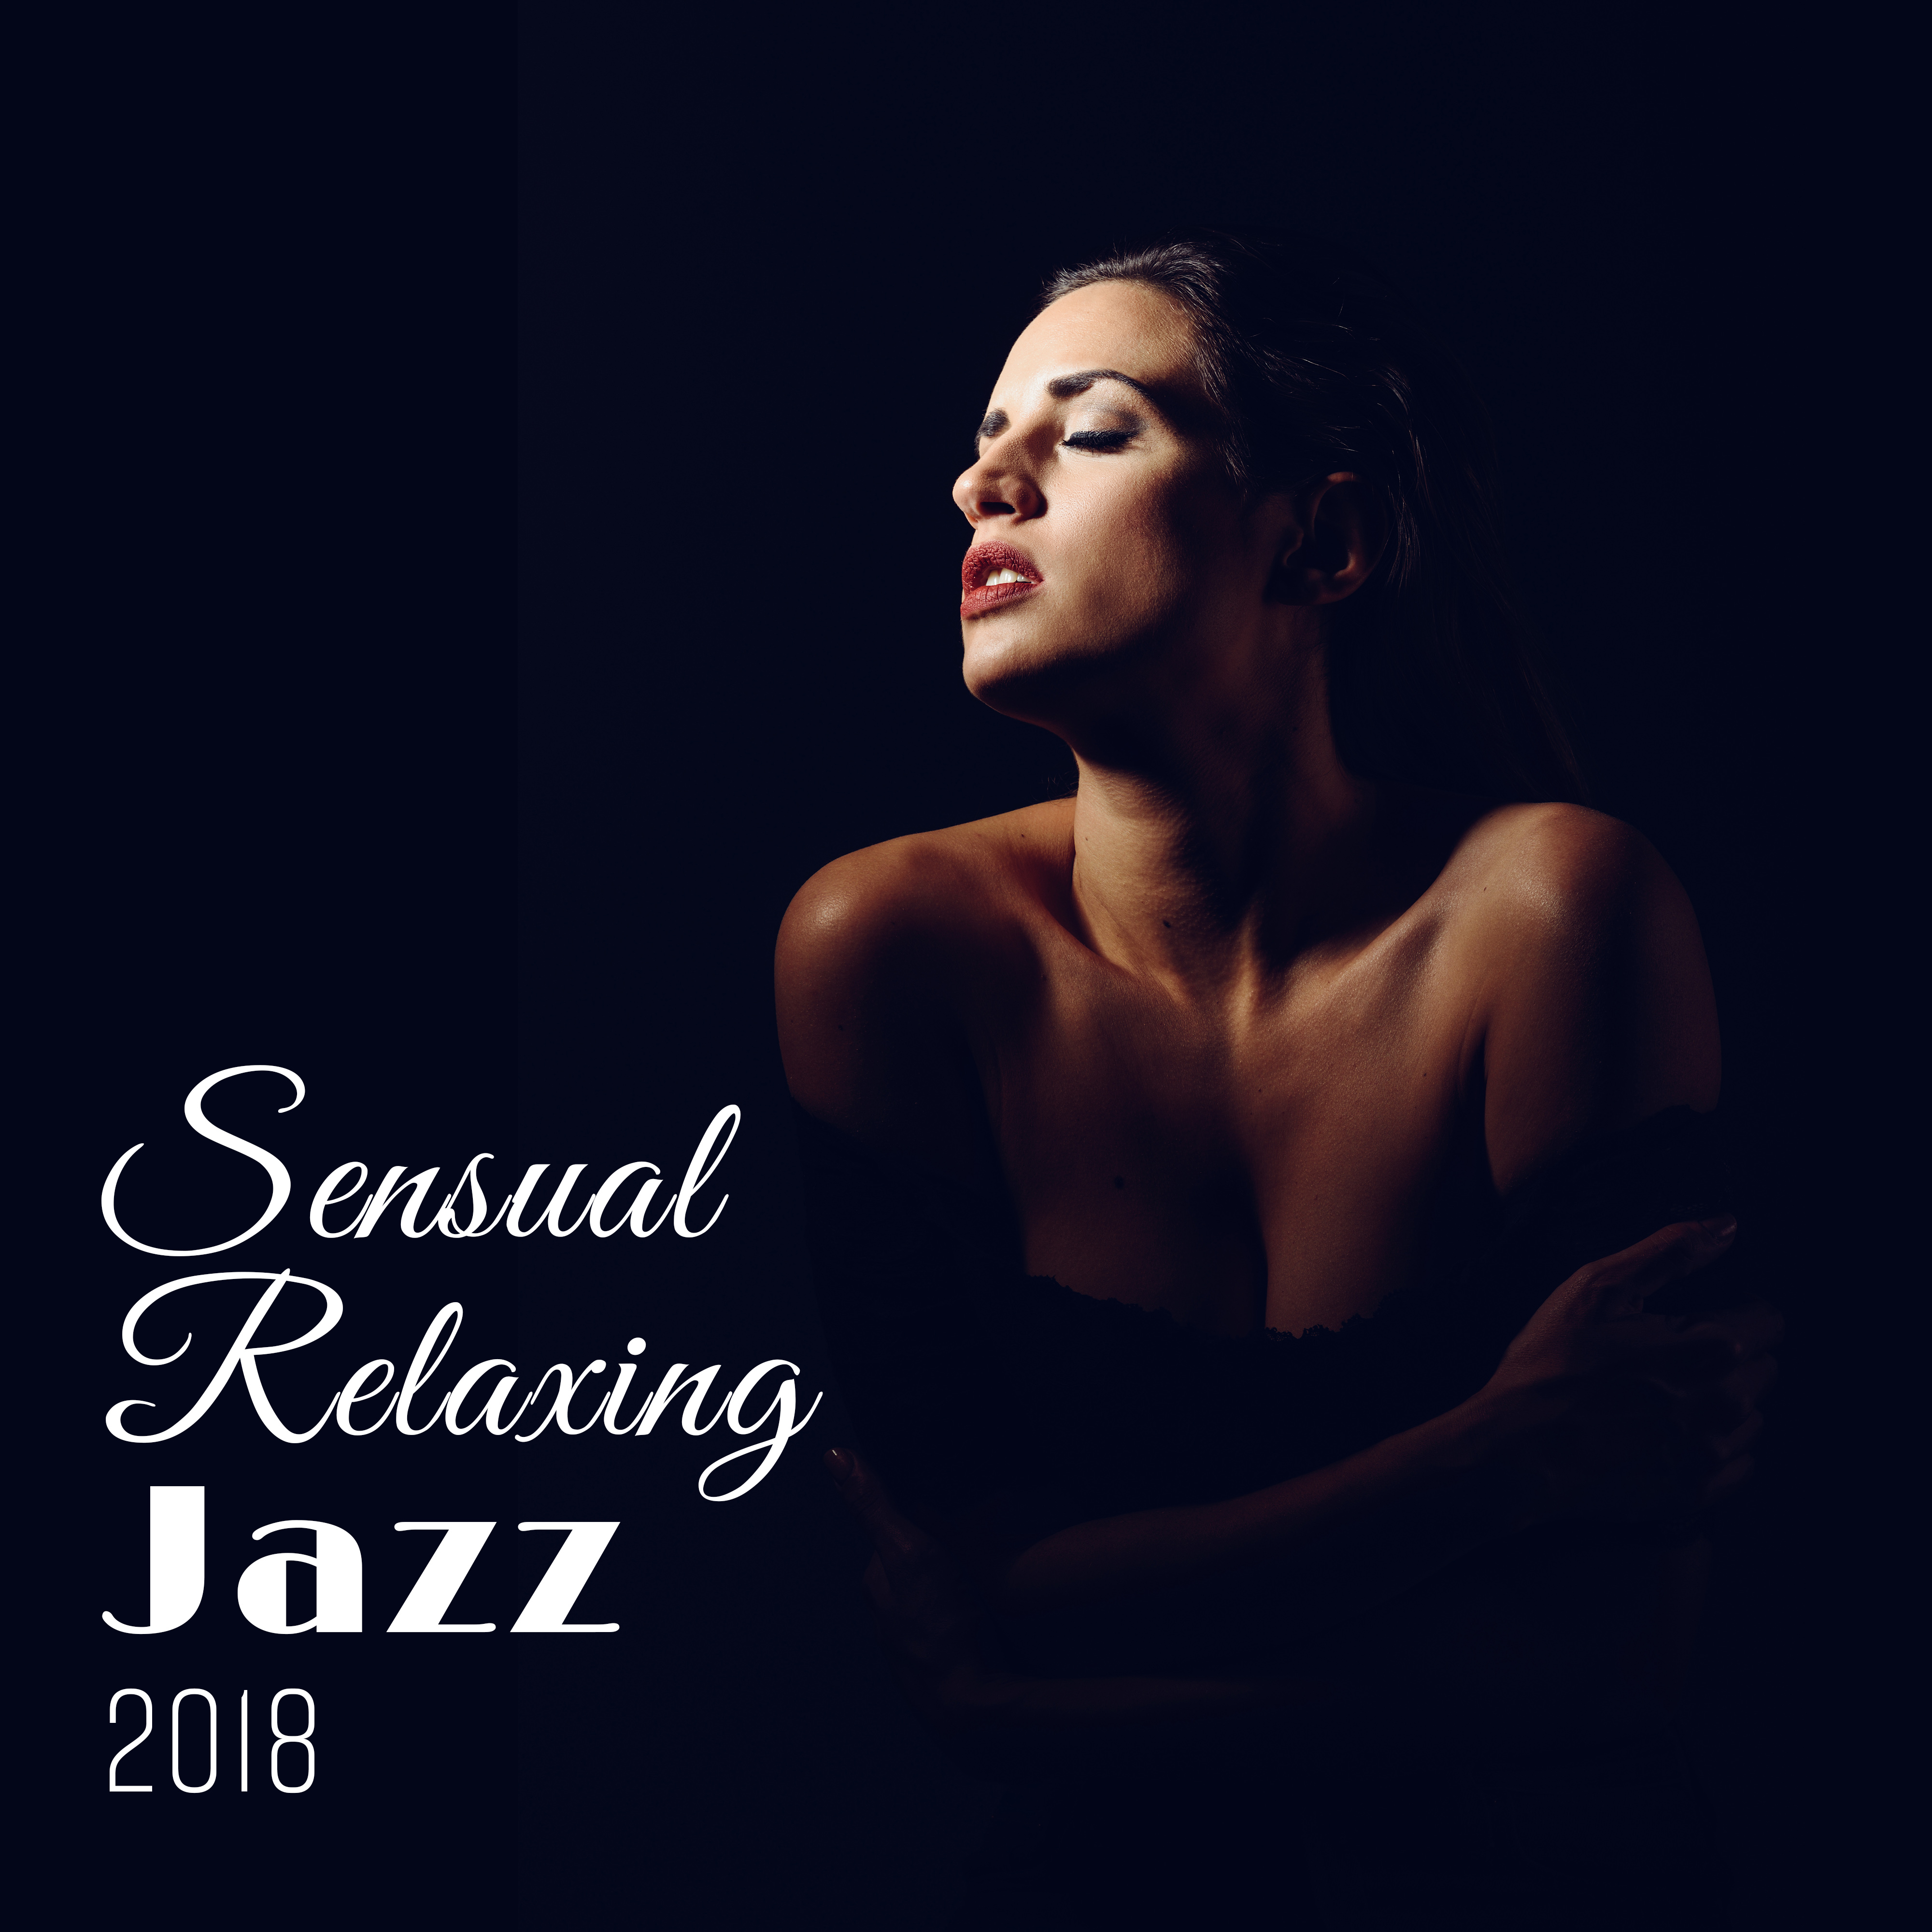 Sensual Relaxing Jazz 2018